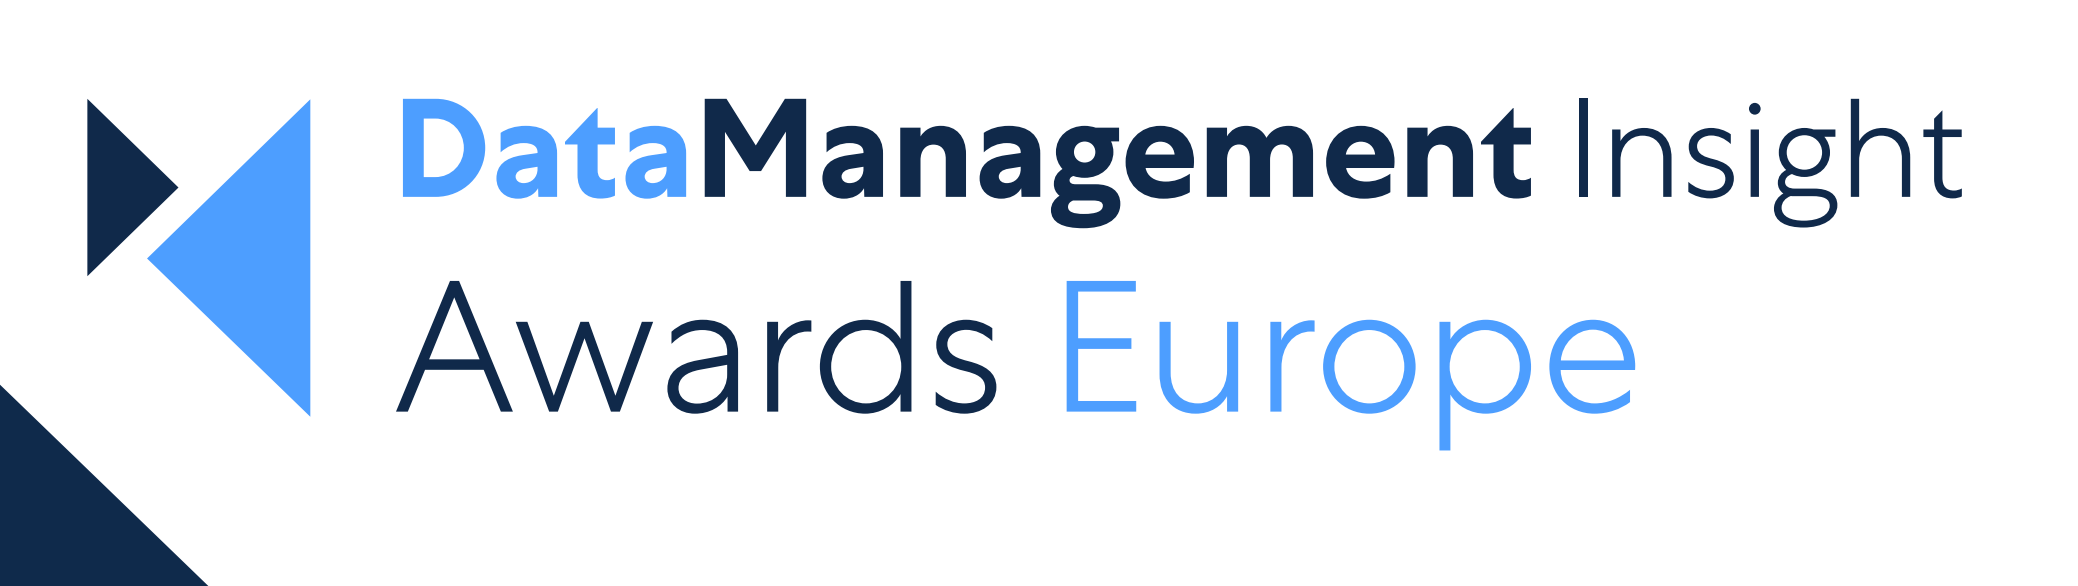 Data Management Insight Europe